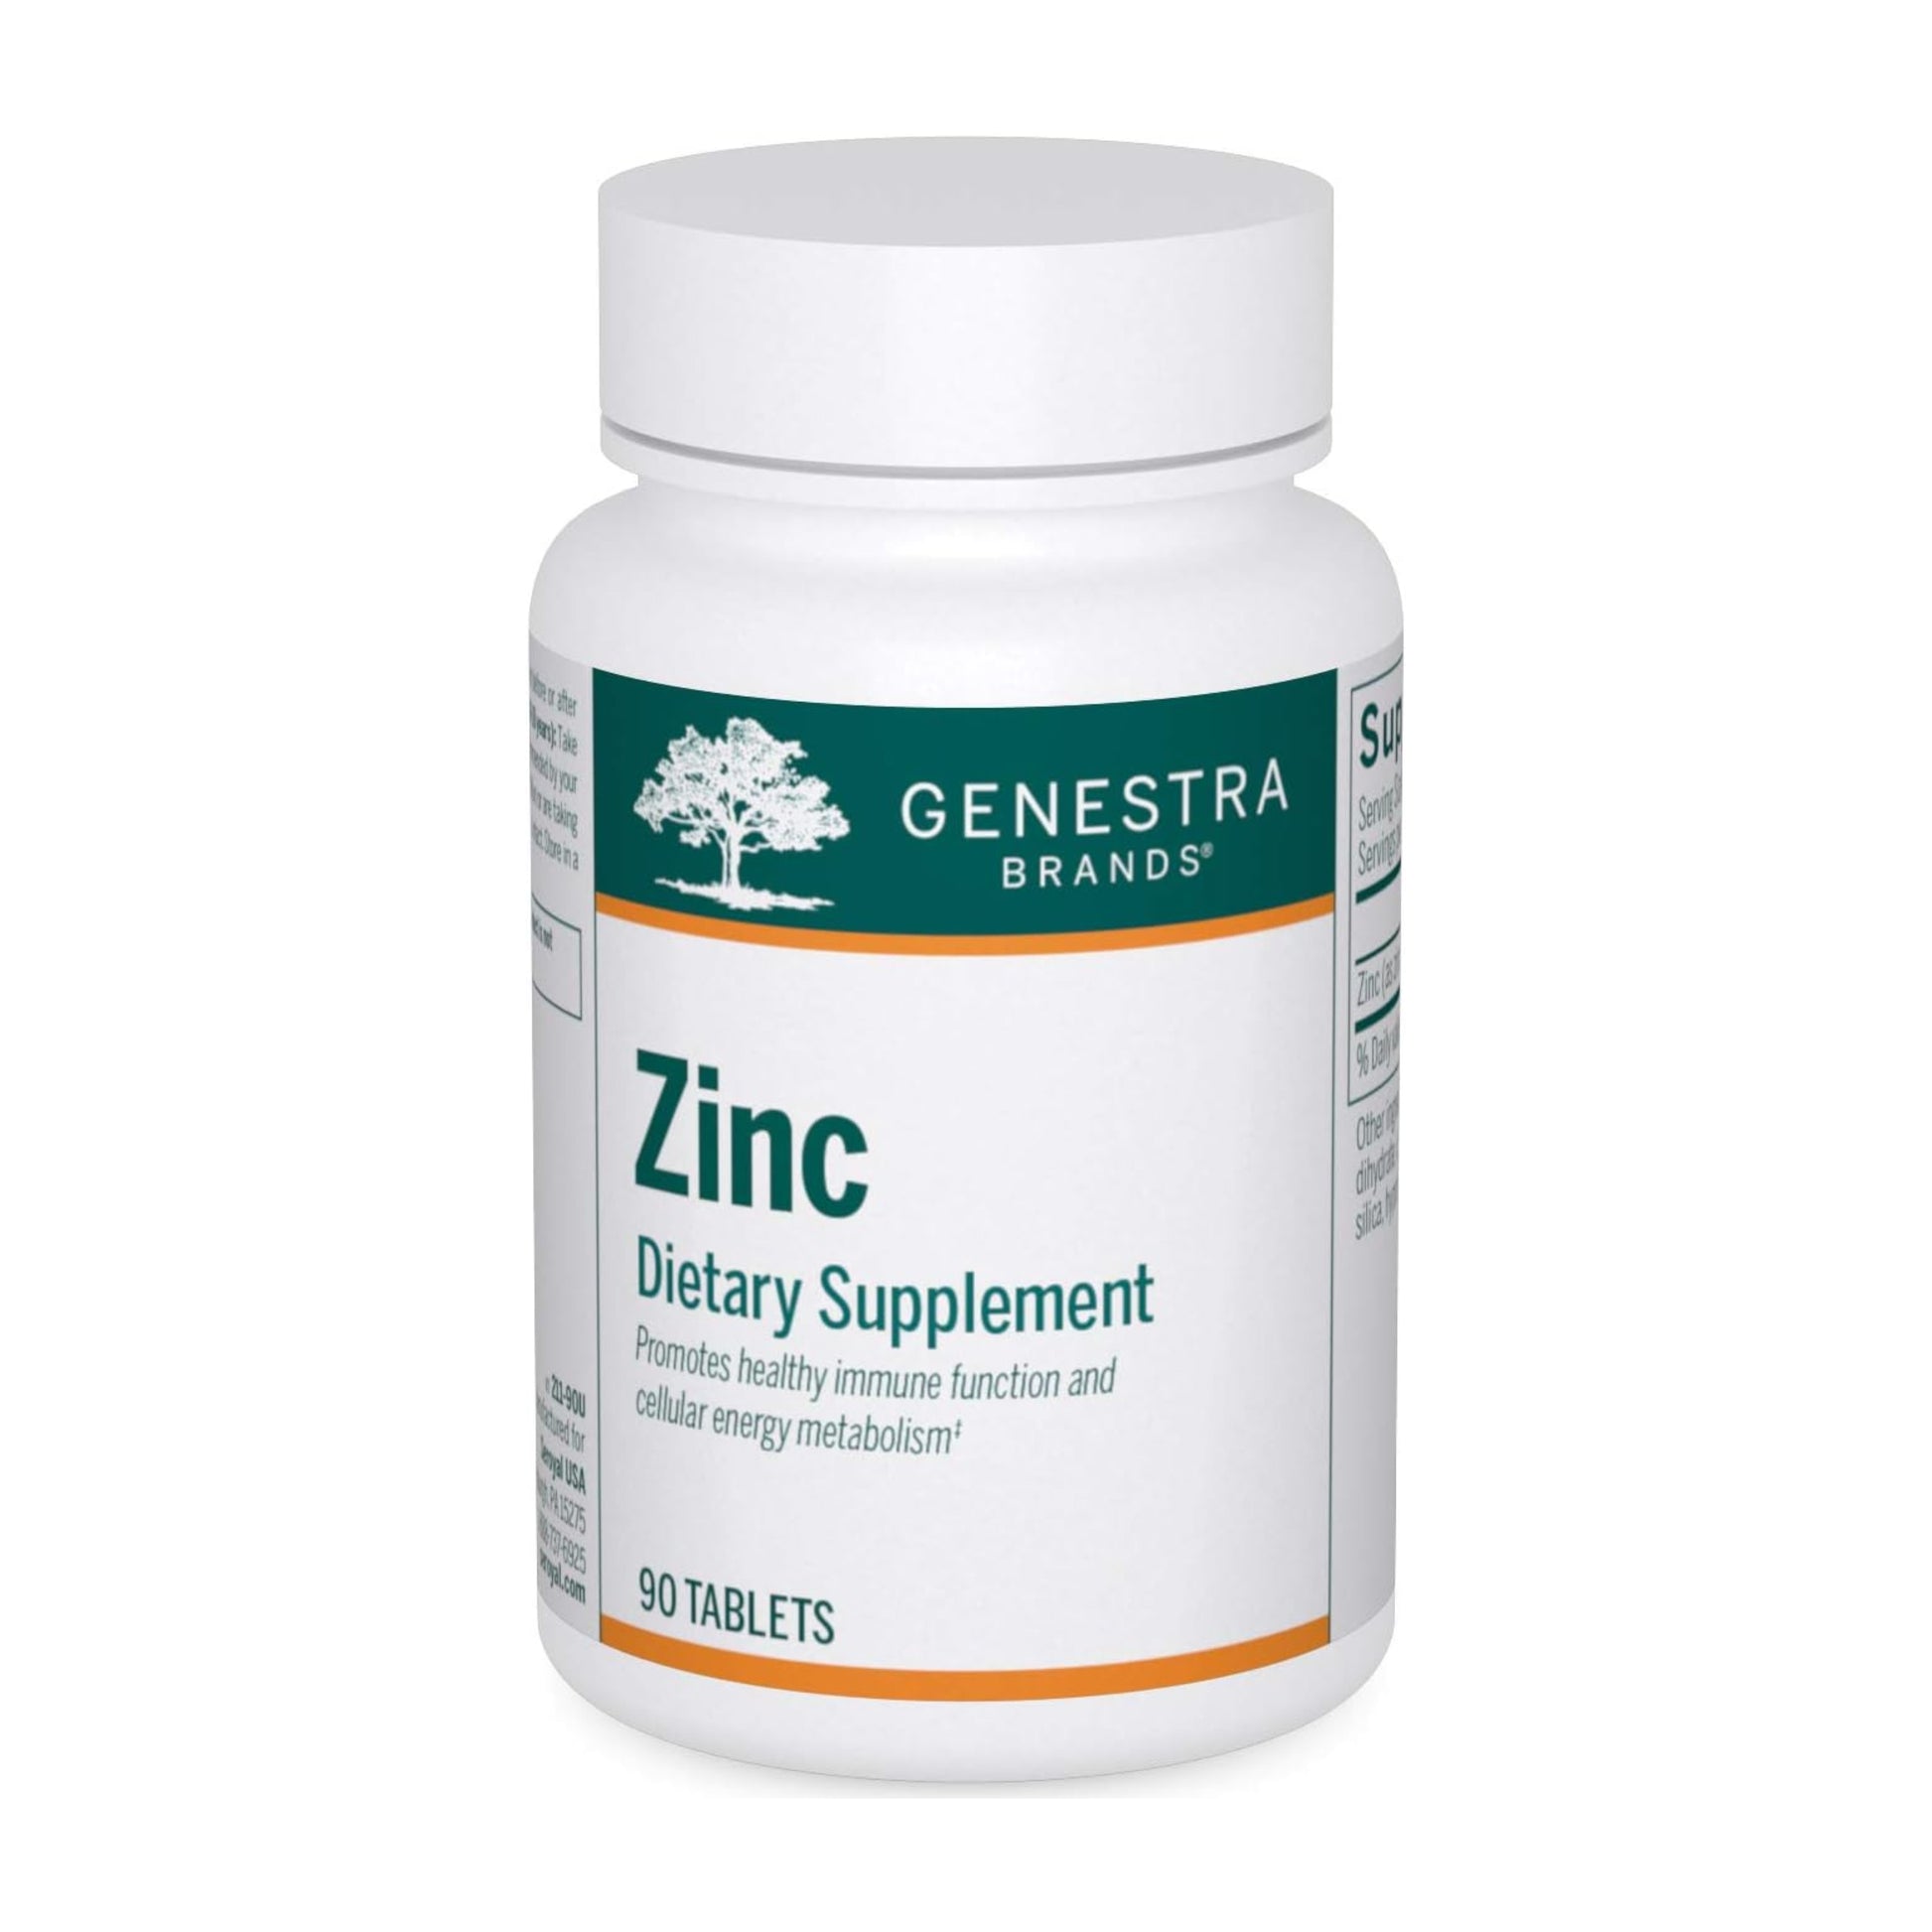 genestra brands zinc